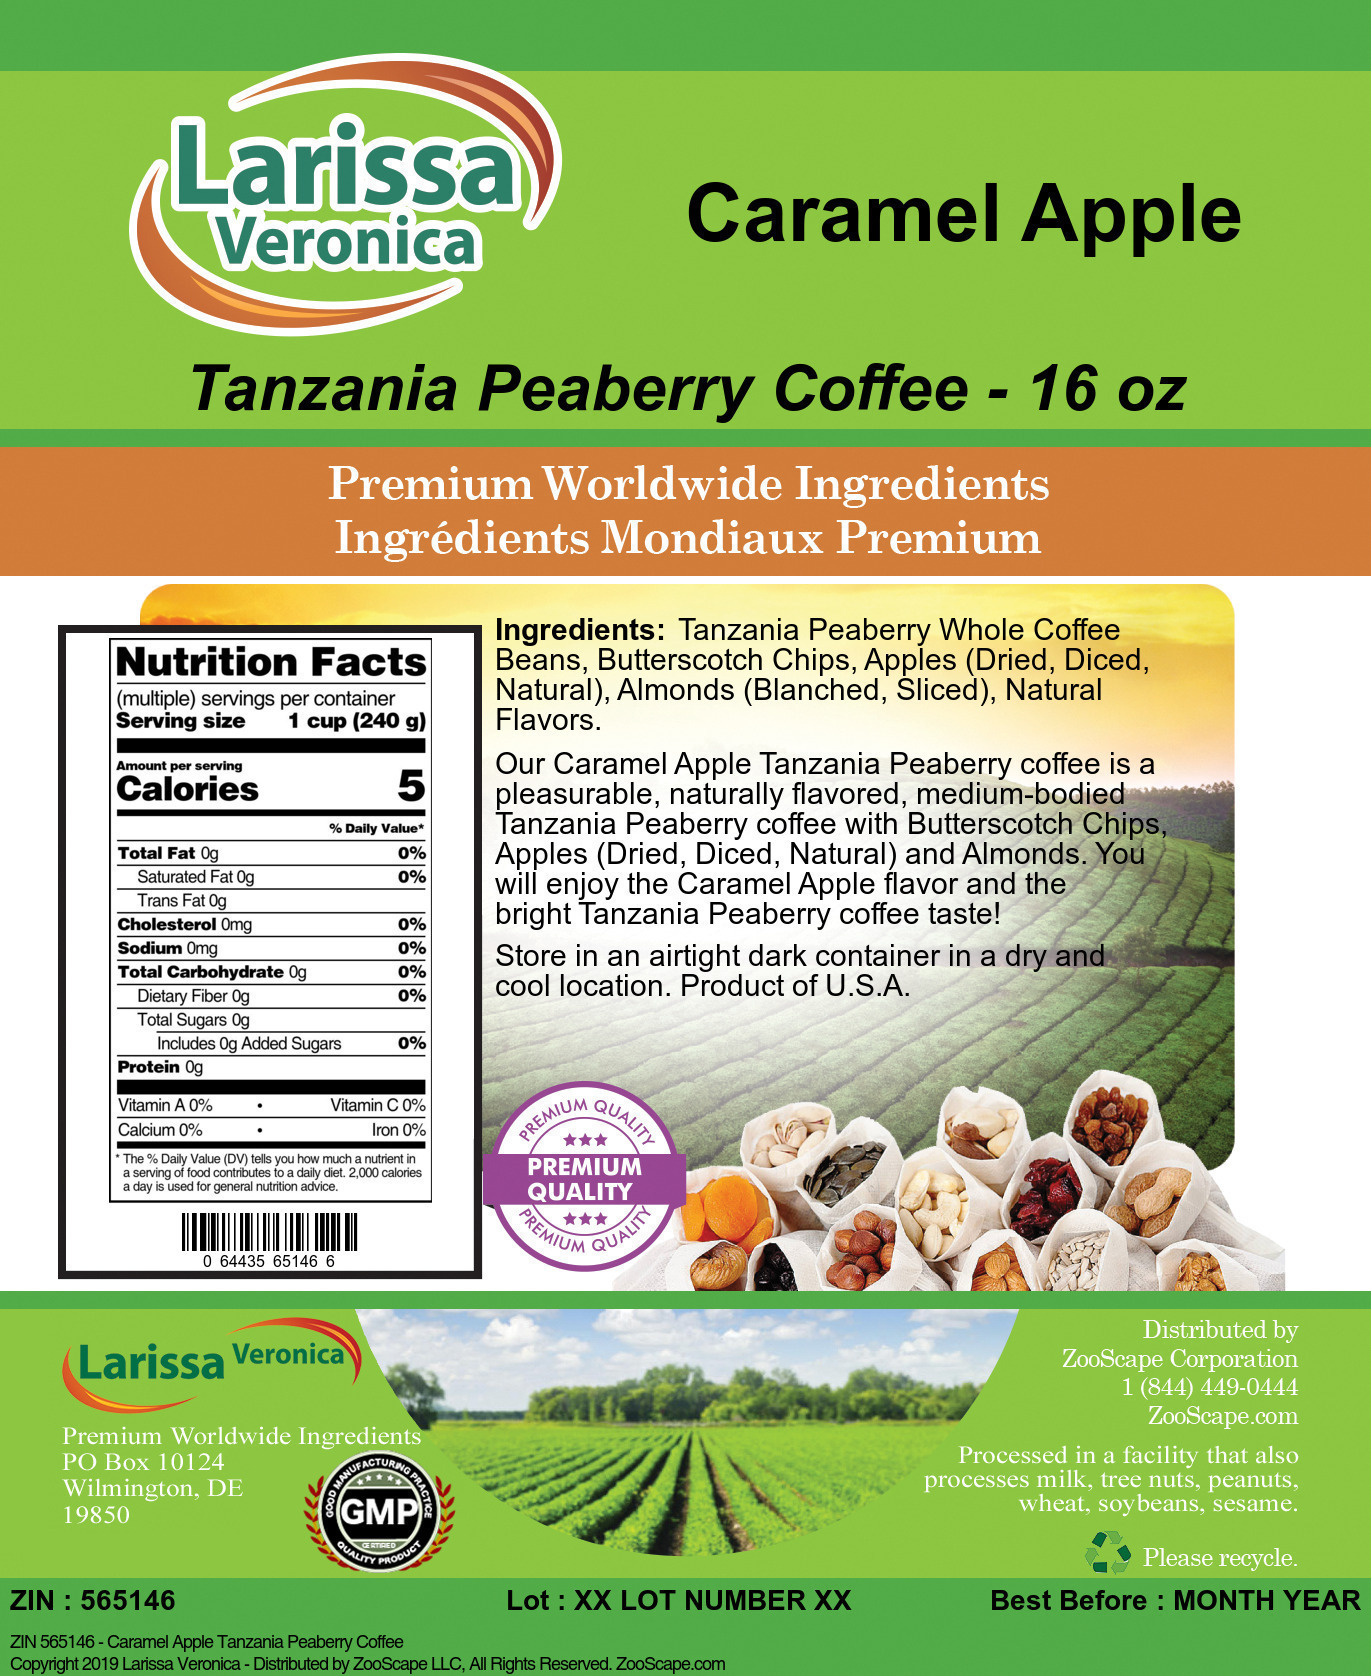 Caramel Apple Tanzania Peaberry Coffee - Label